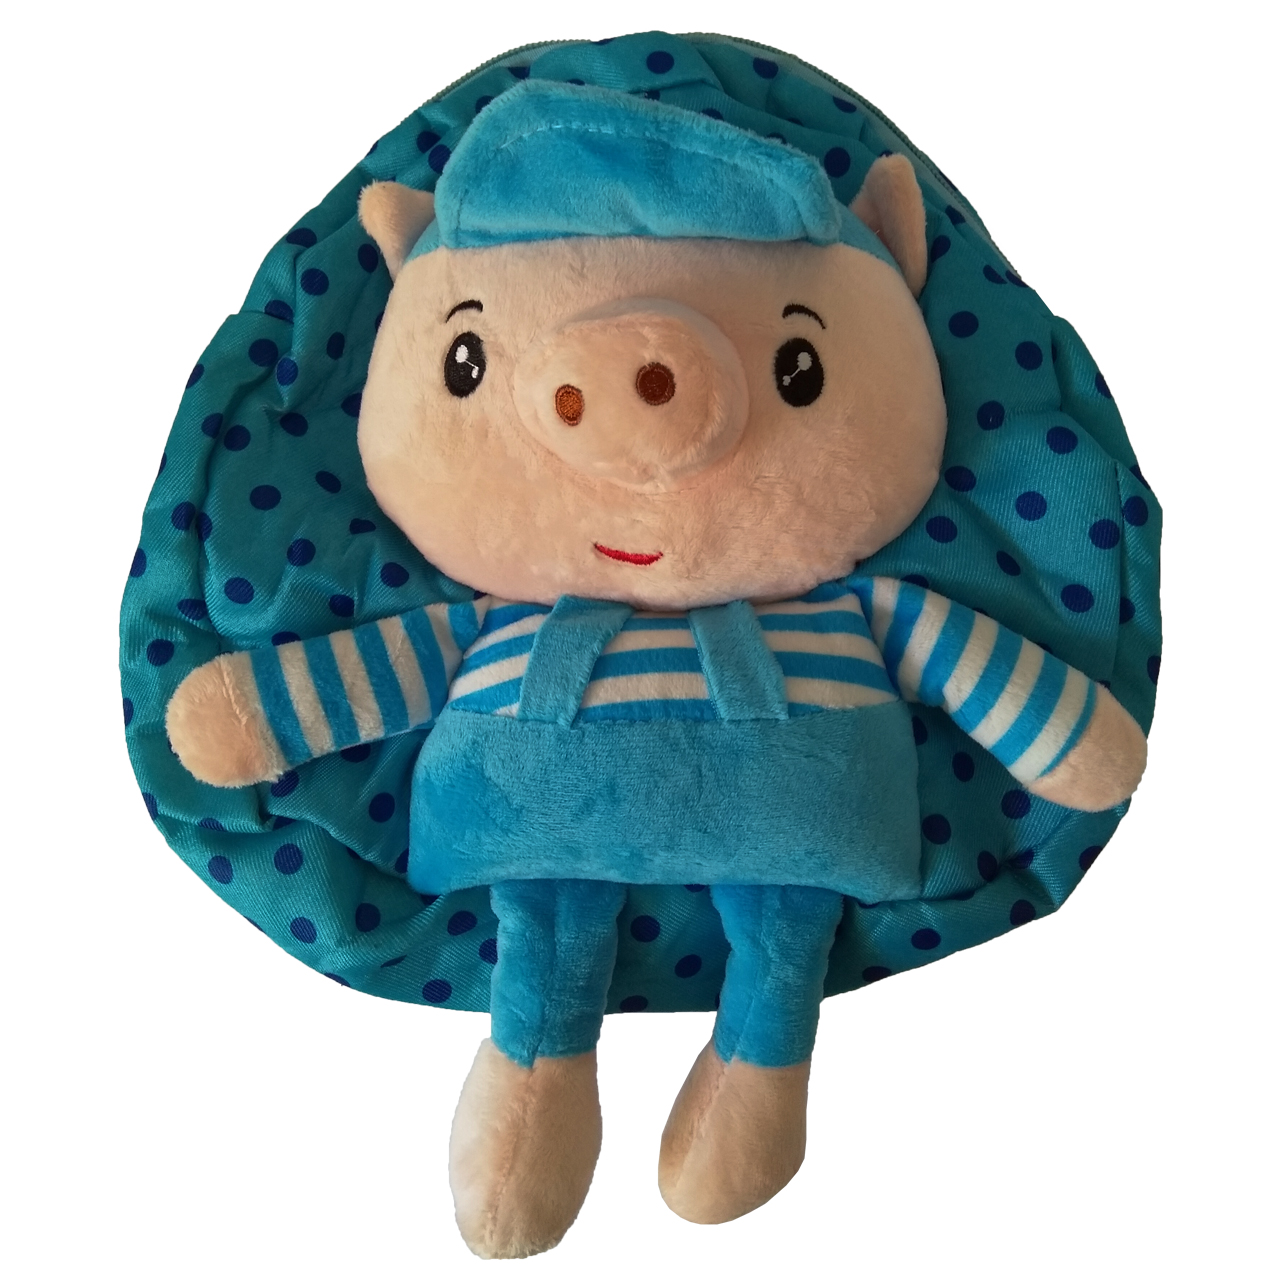 کیف عروسکی مهد کودک مدل خوک آبی